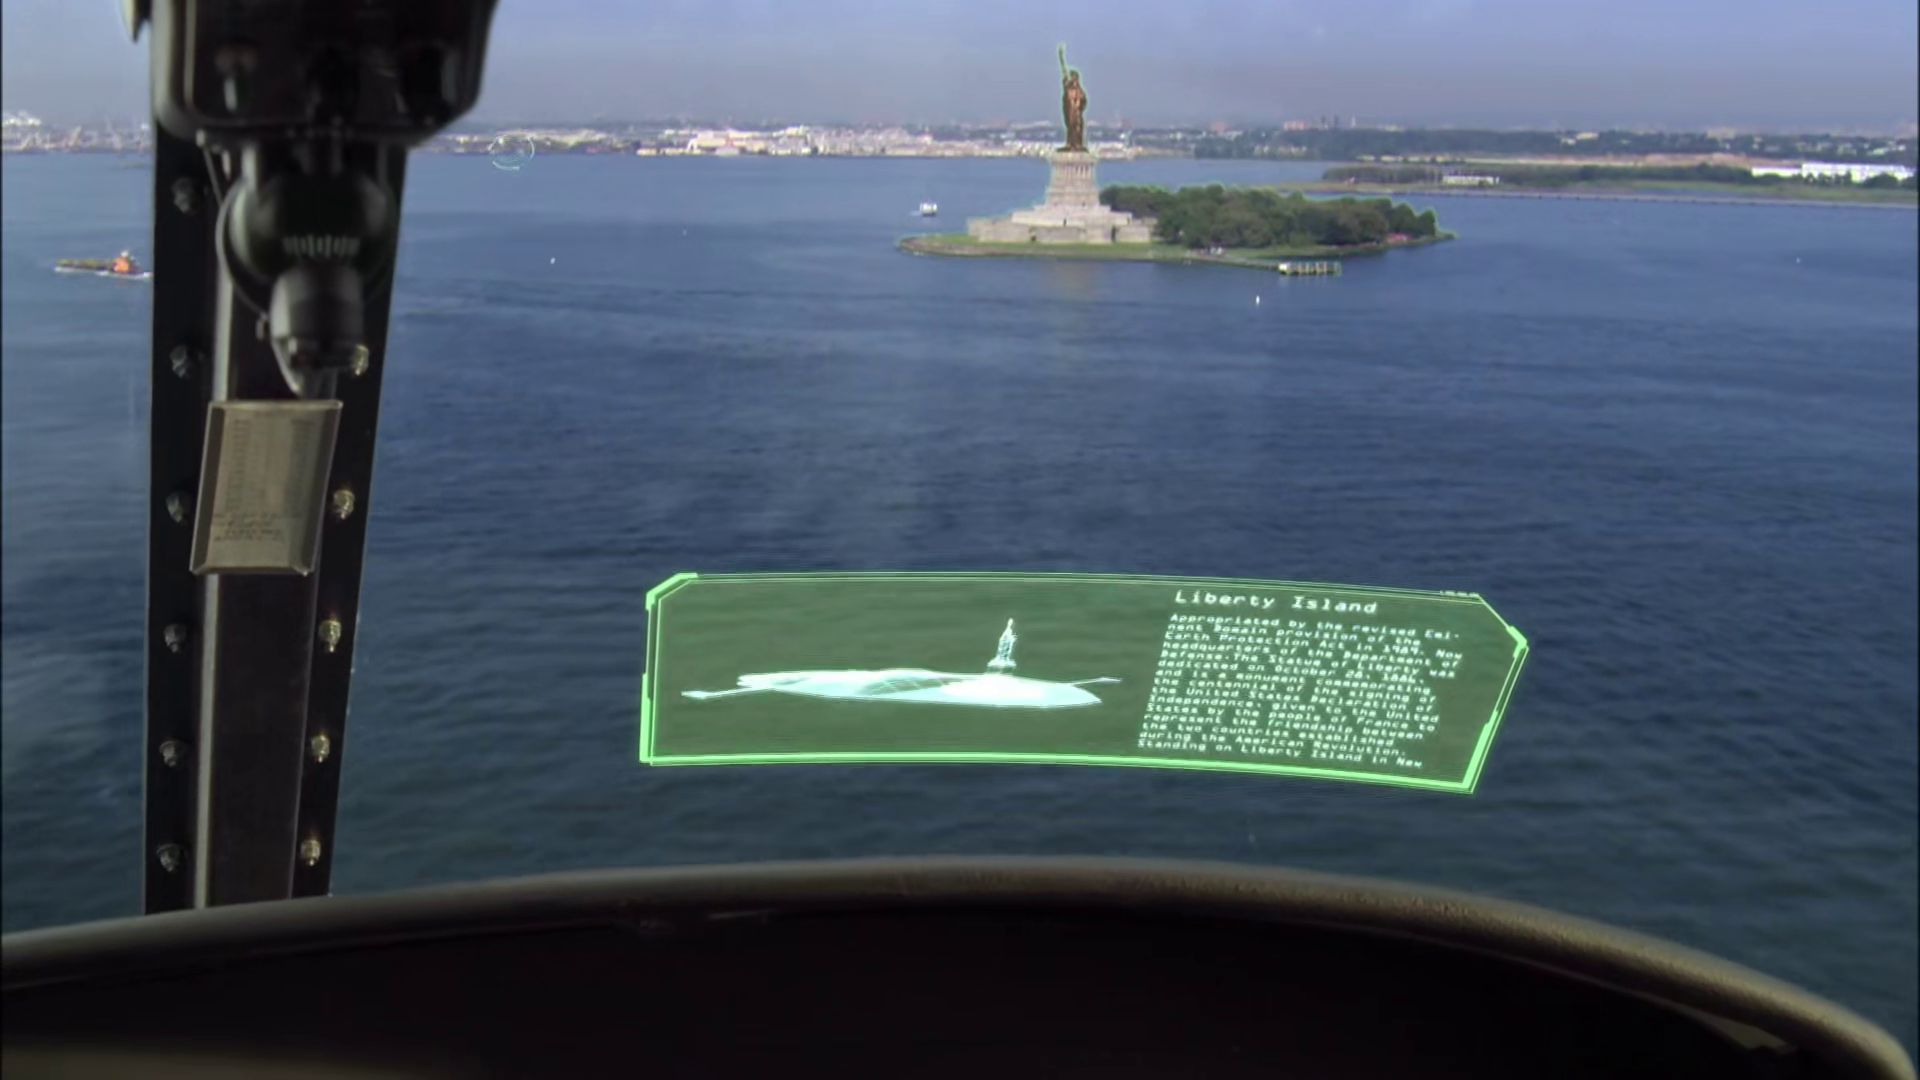 Difference: Liberty Island